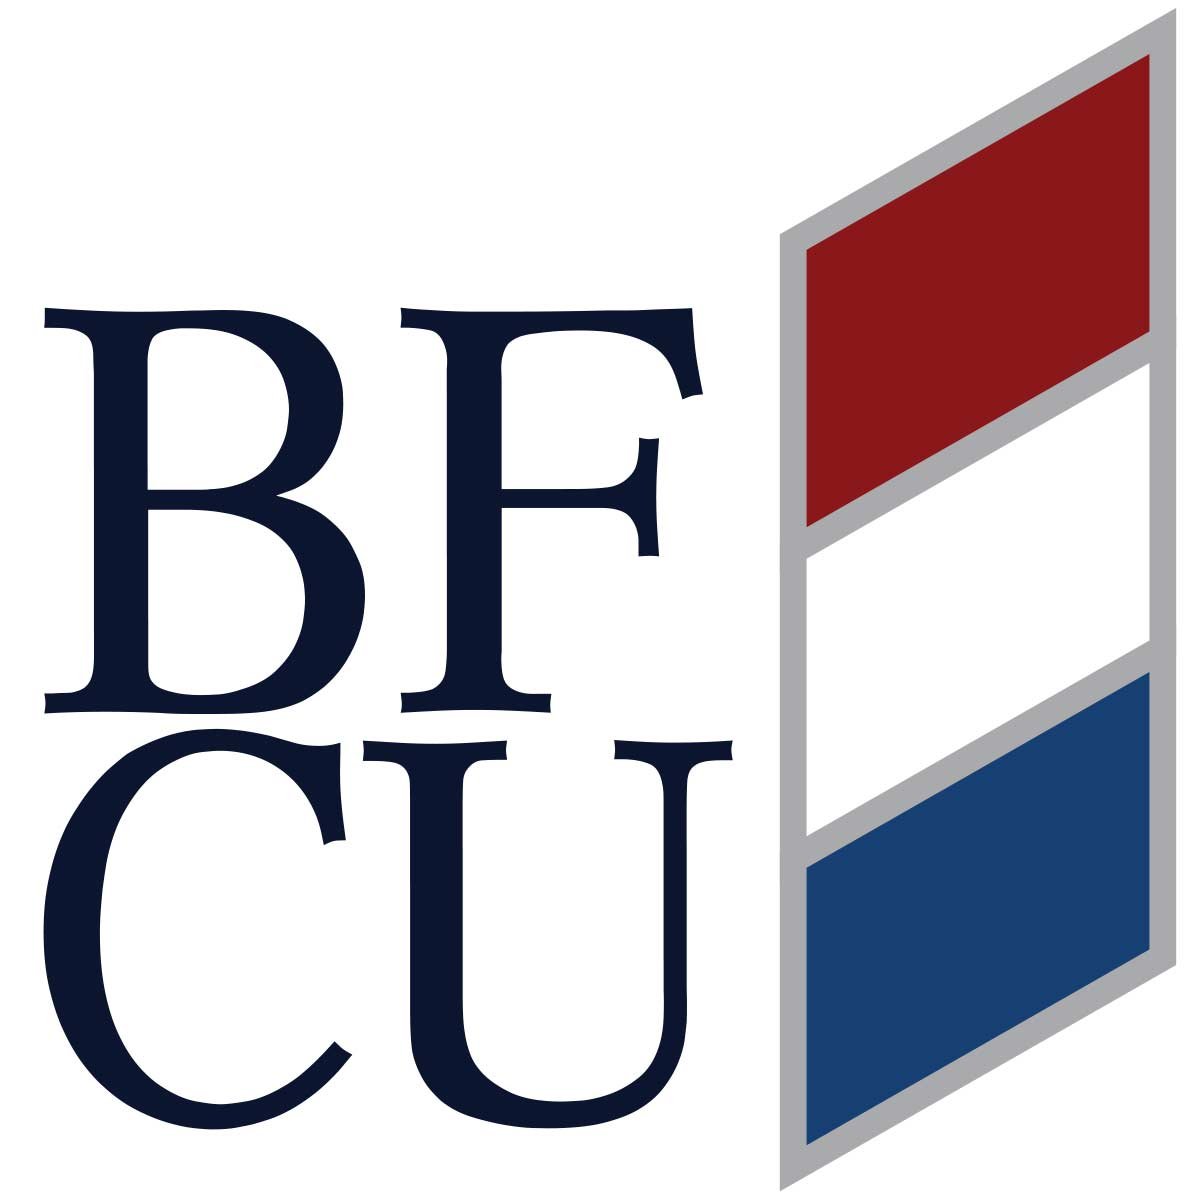 bfcu-social-logo.jpg